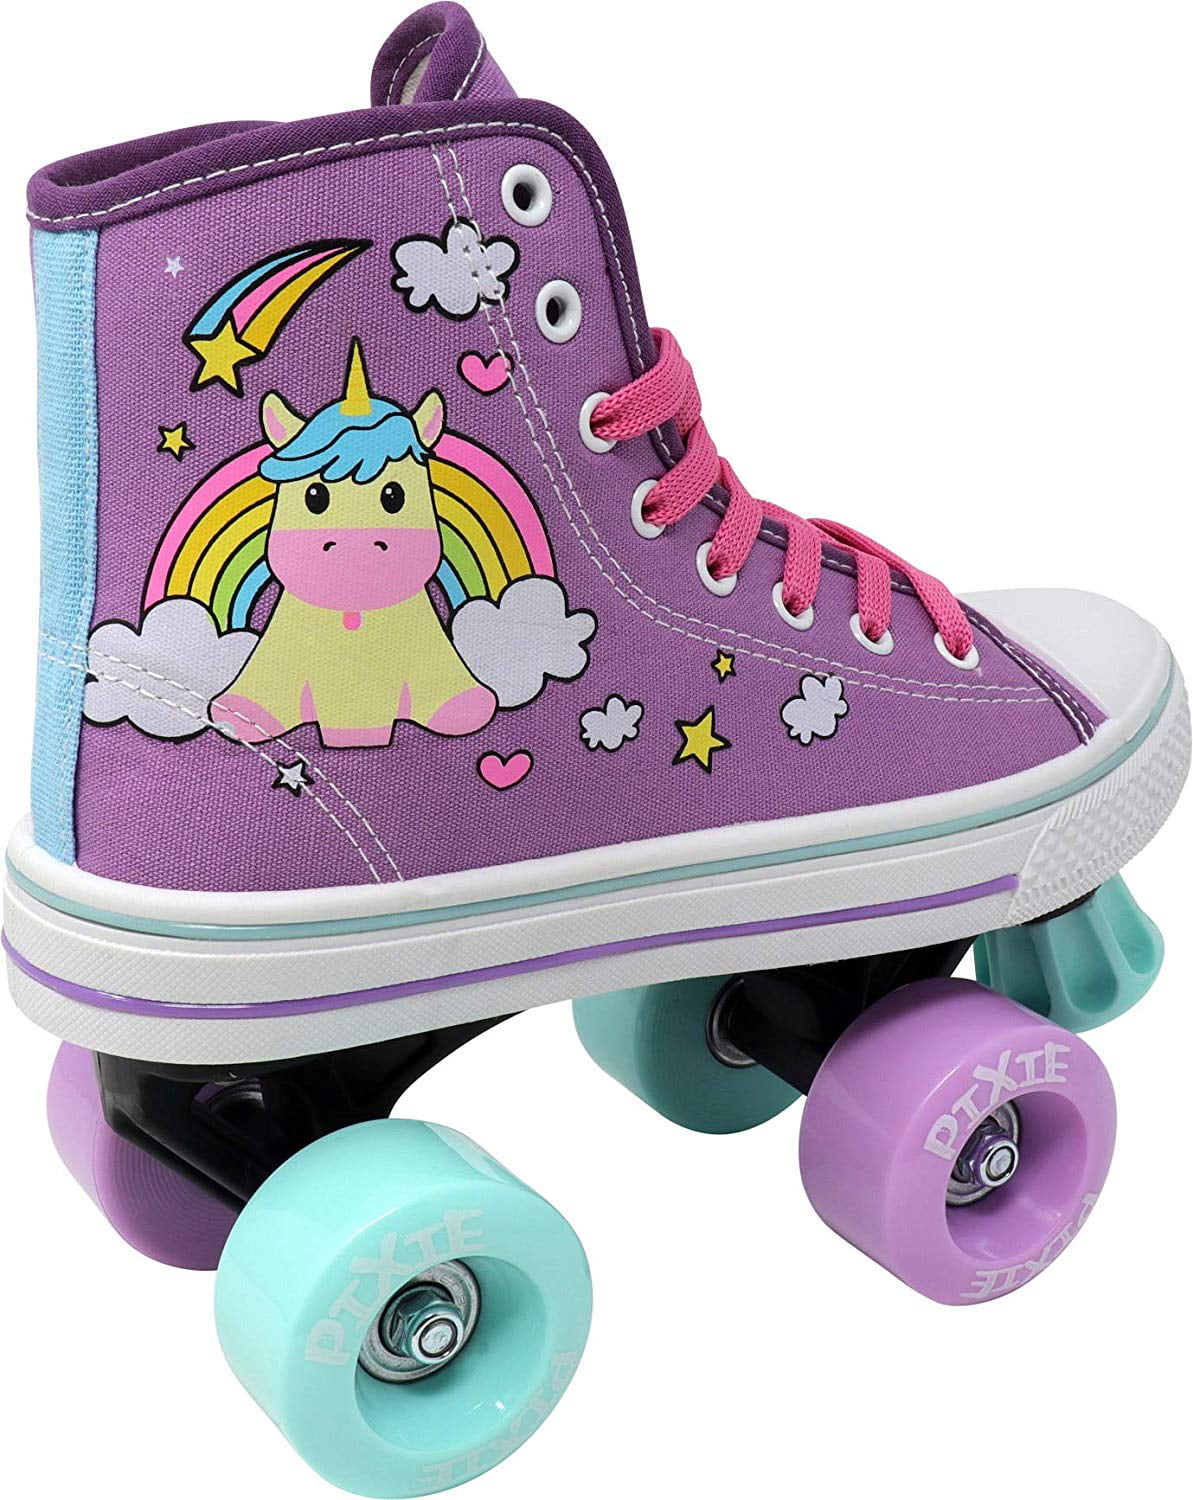 Lenexa Roller Skates for Girls Pixie Kid/’s Quad Roller Skates with High Top Shoe Style for Indoor//Outdoor Skating Made for Kids Easy to Skate Durable